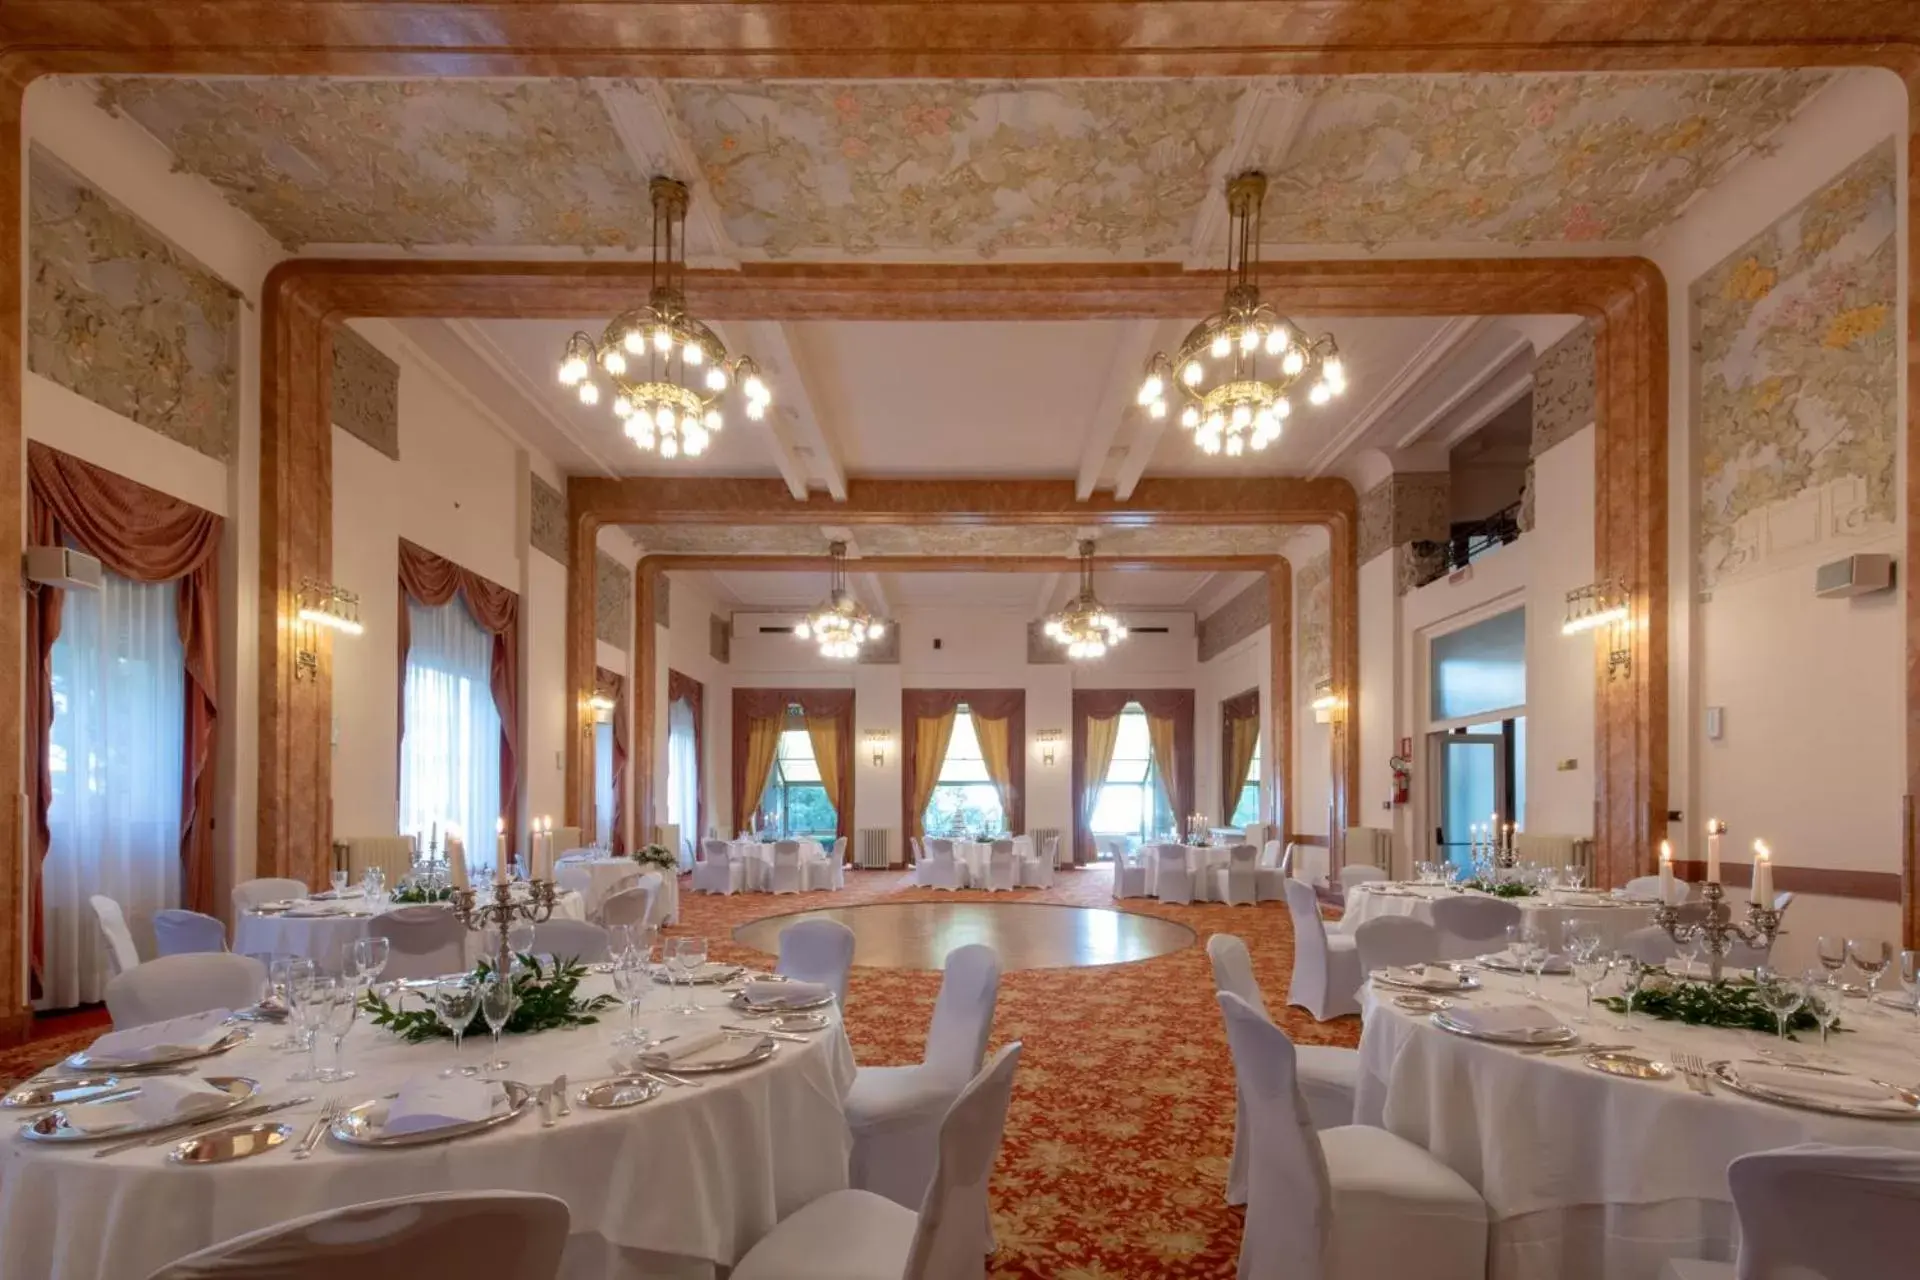 Banquet/Function facilities, Banquet Facilities in Palace Grand Hotel Varese